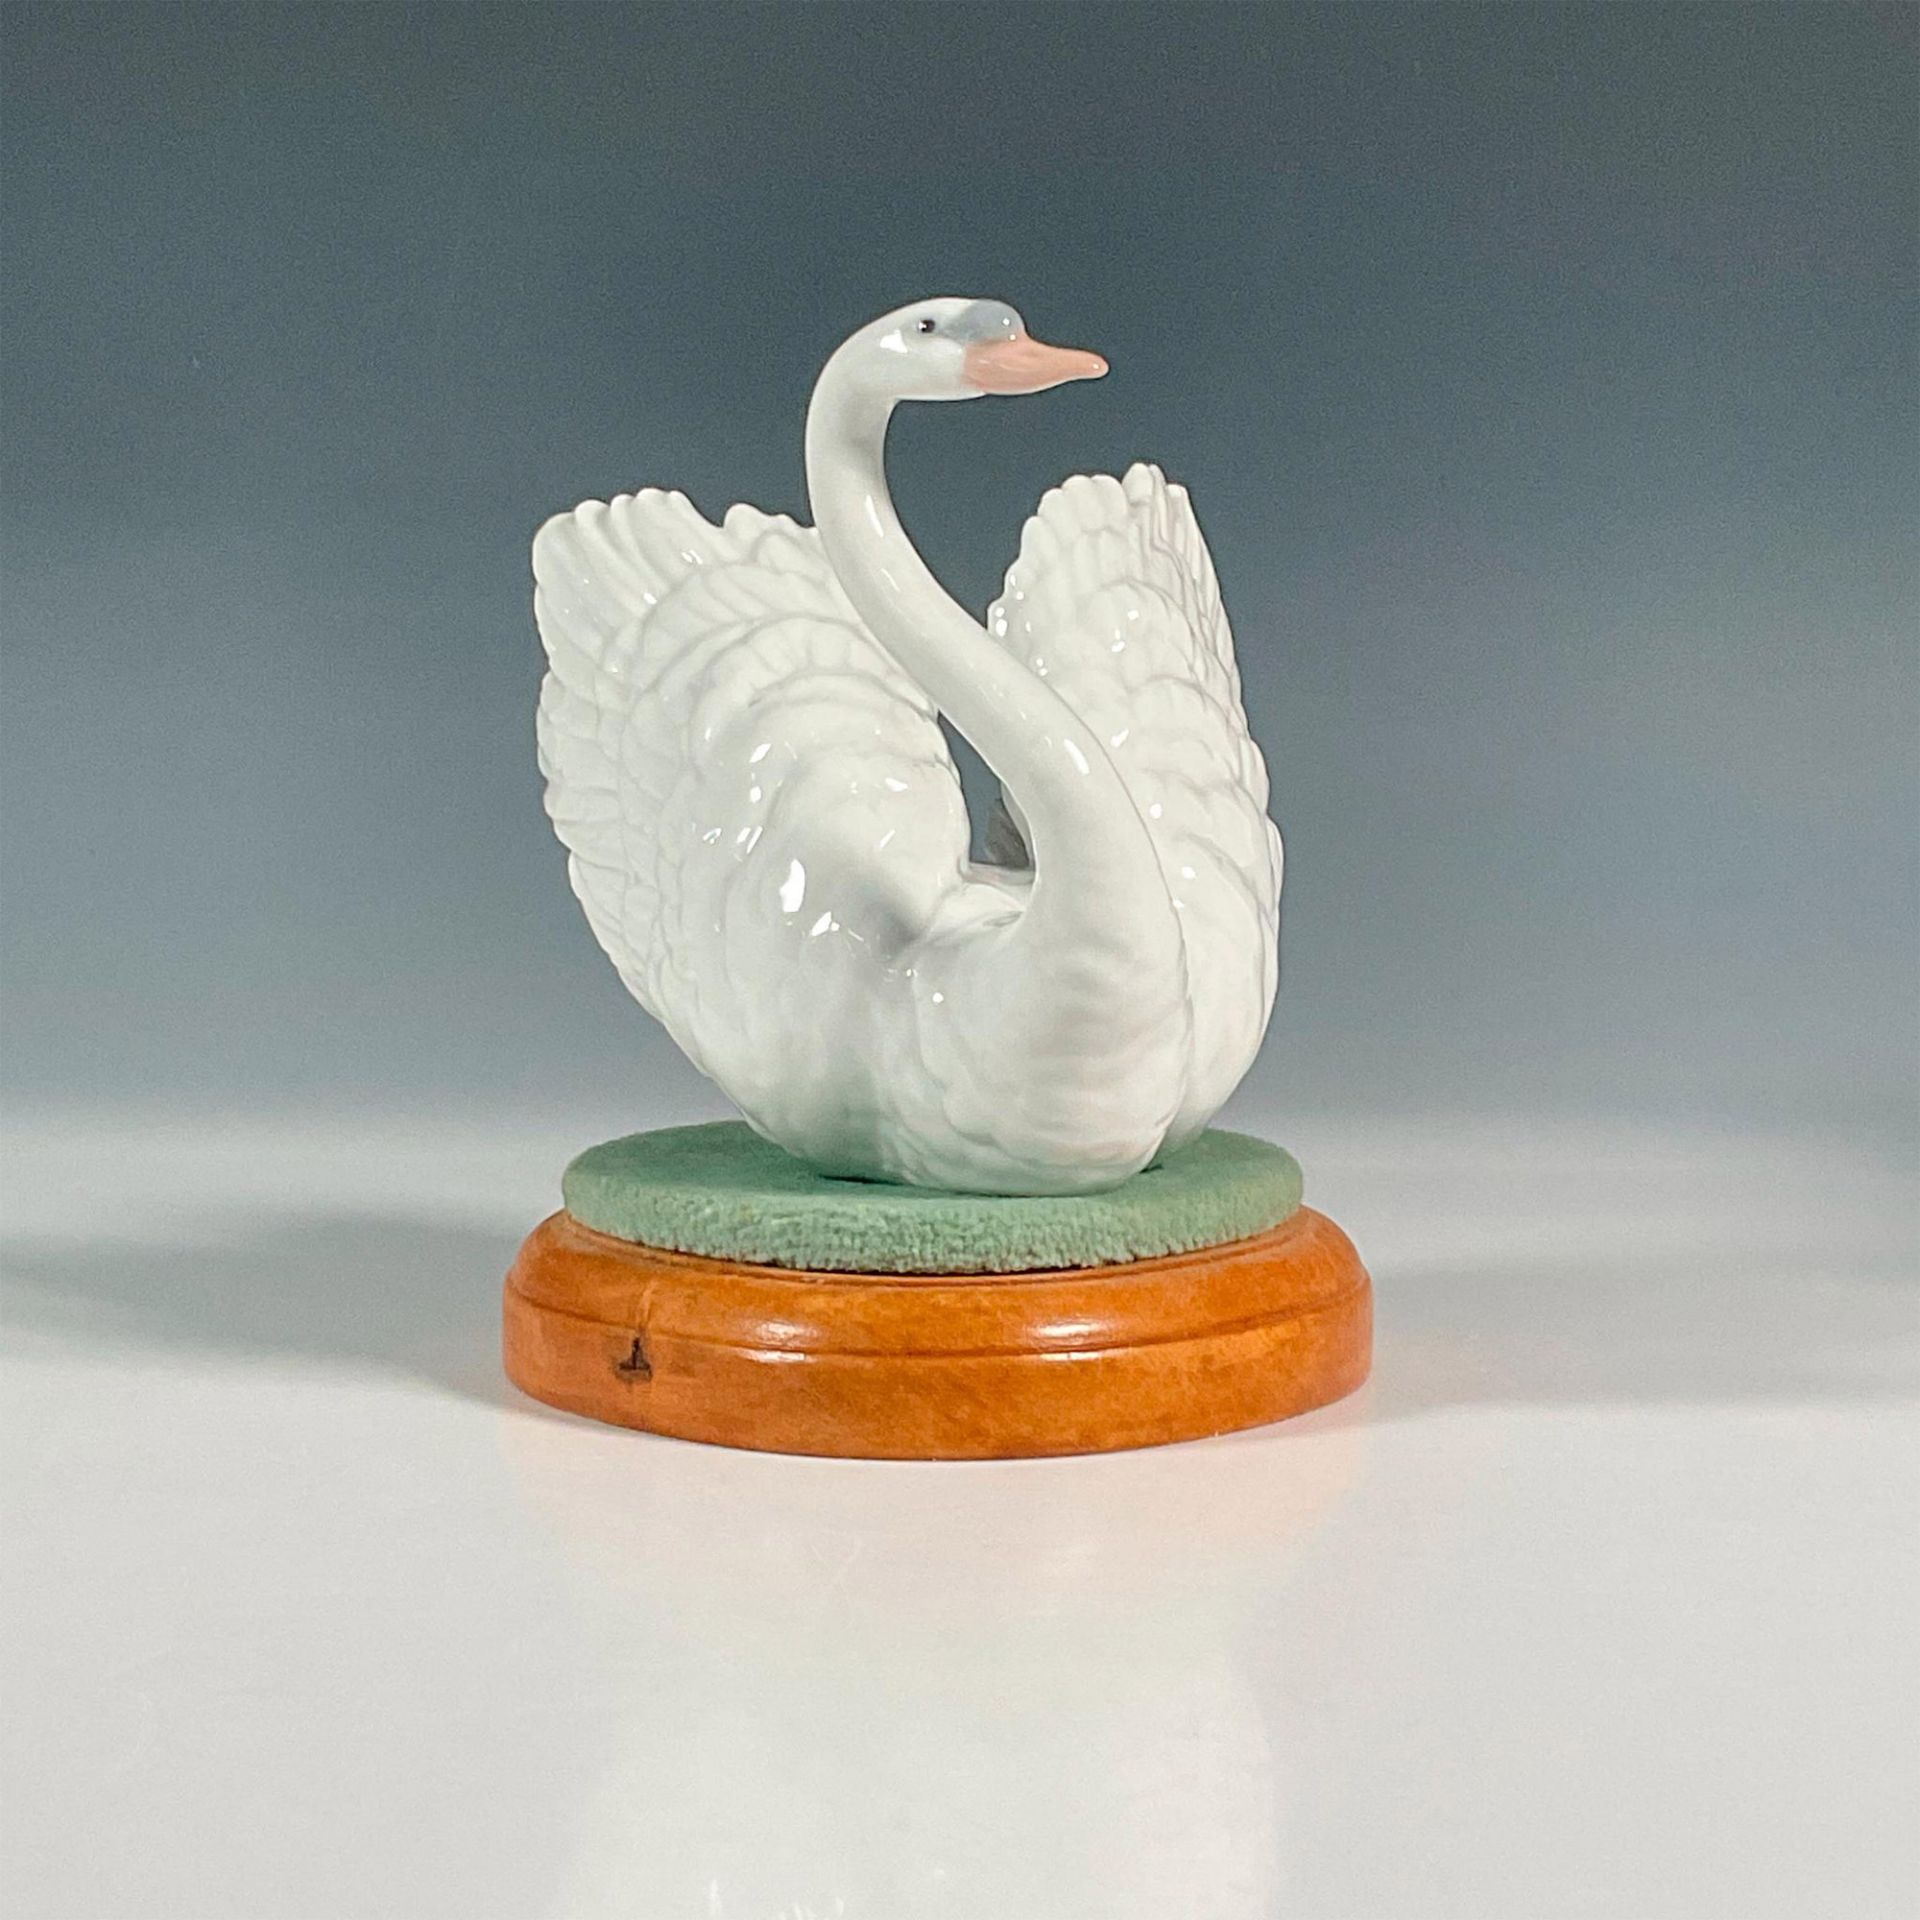 White Swan 1006175 - Lladro Porcelain Figurine